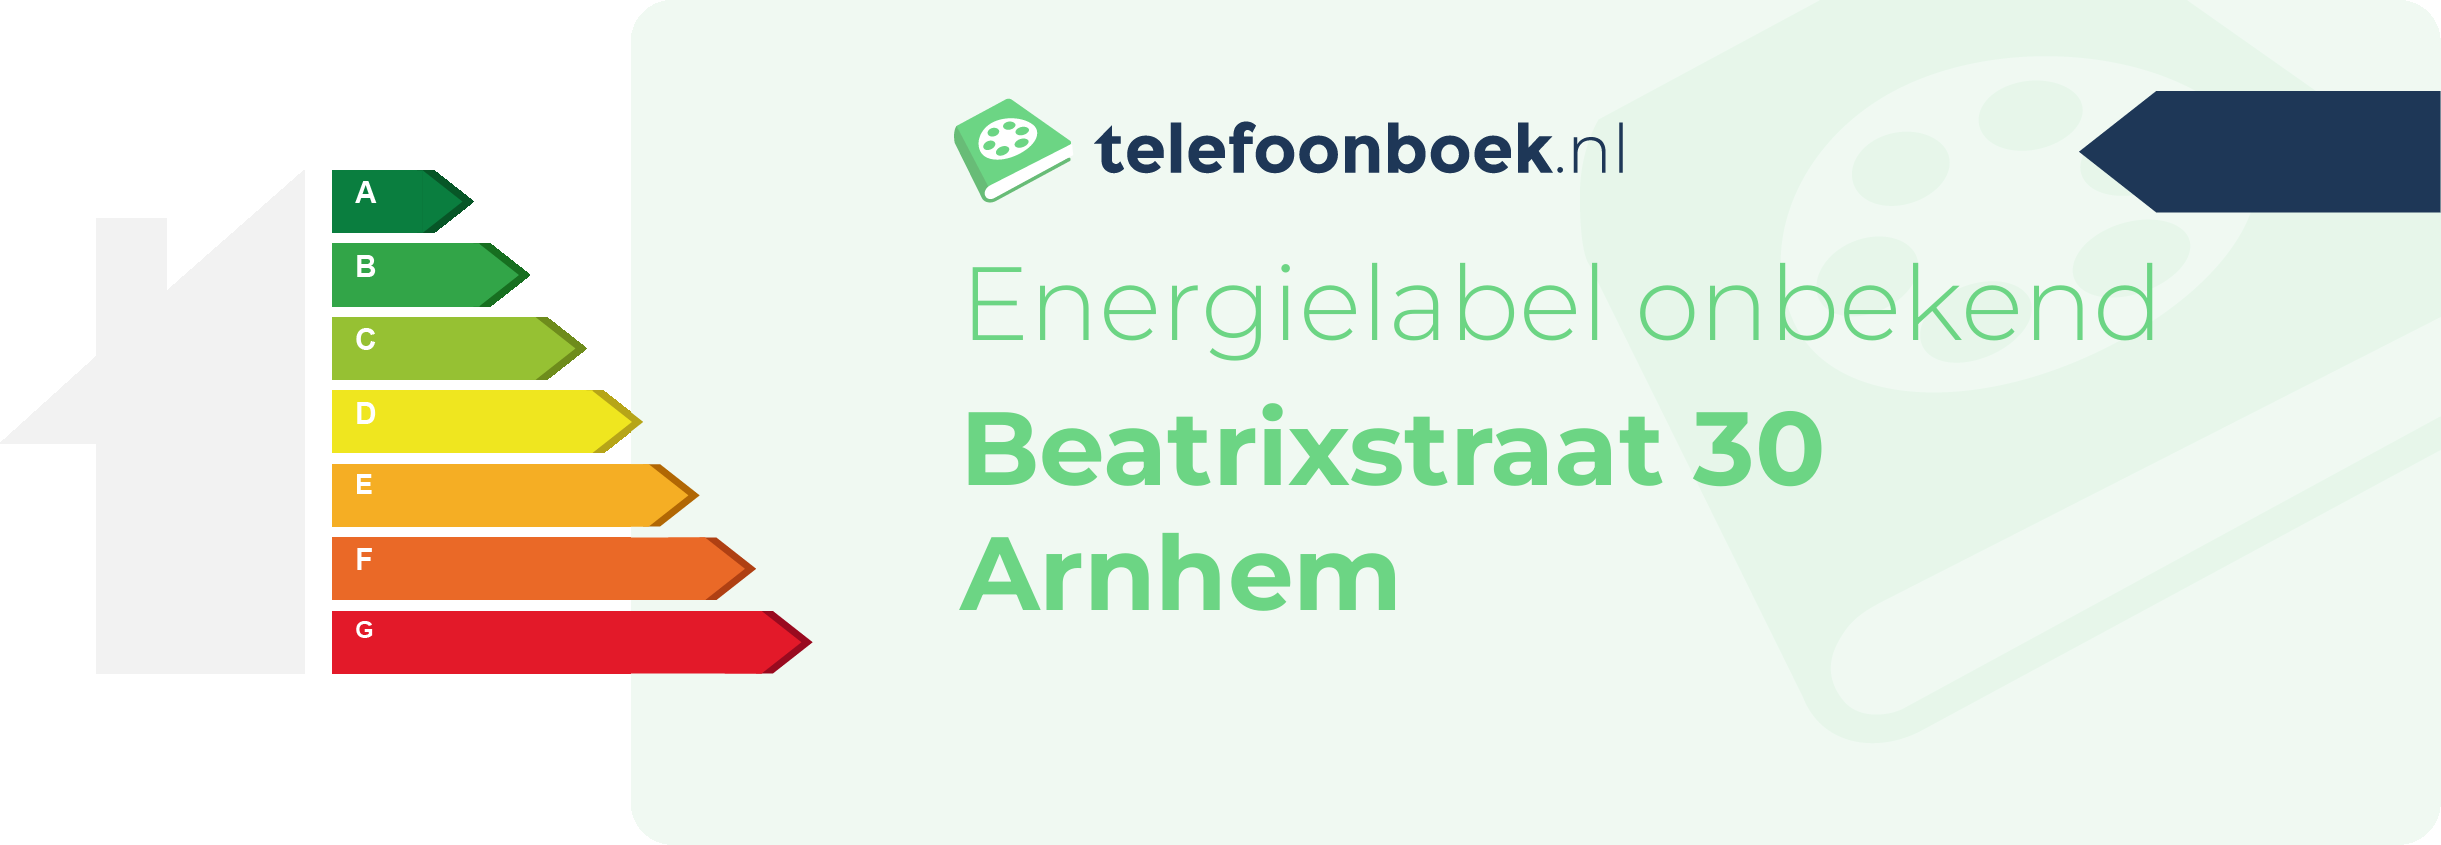 Energielabel Beatrixstraat 30 Arnhem